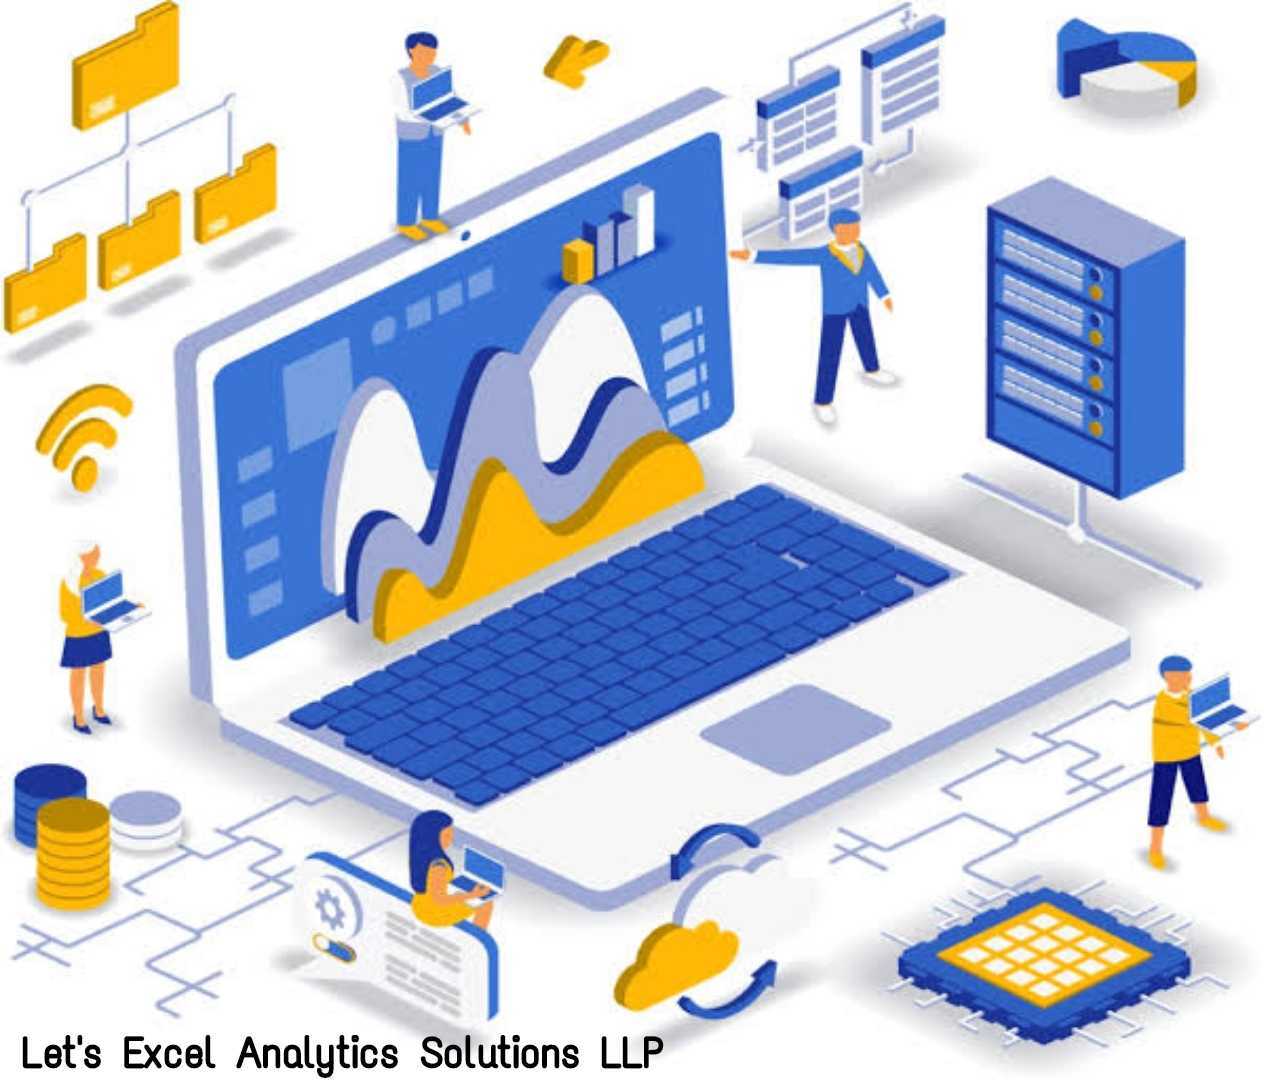 self service analytics platform